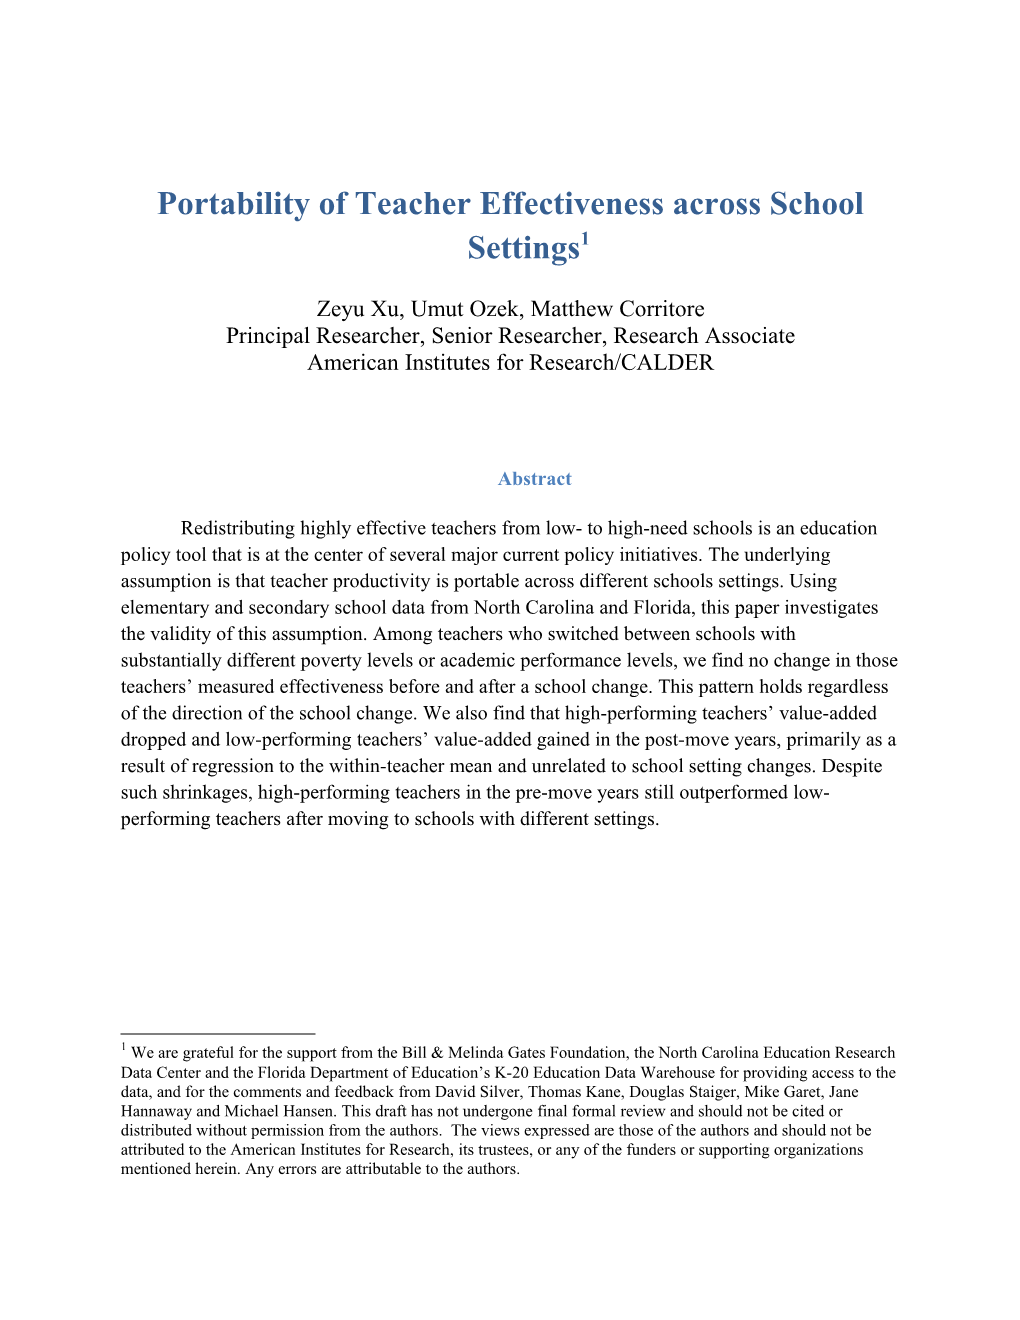 Portability of Teacher Effectiveness Across School Settings